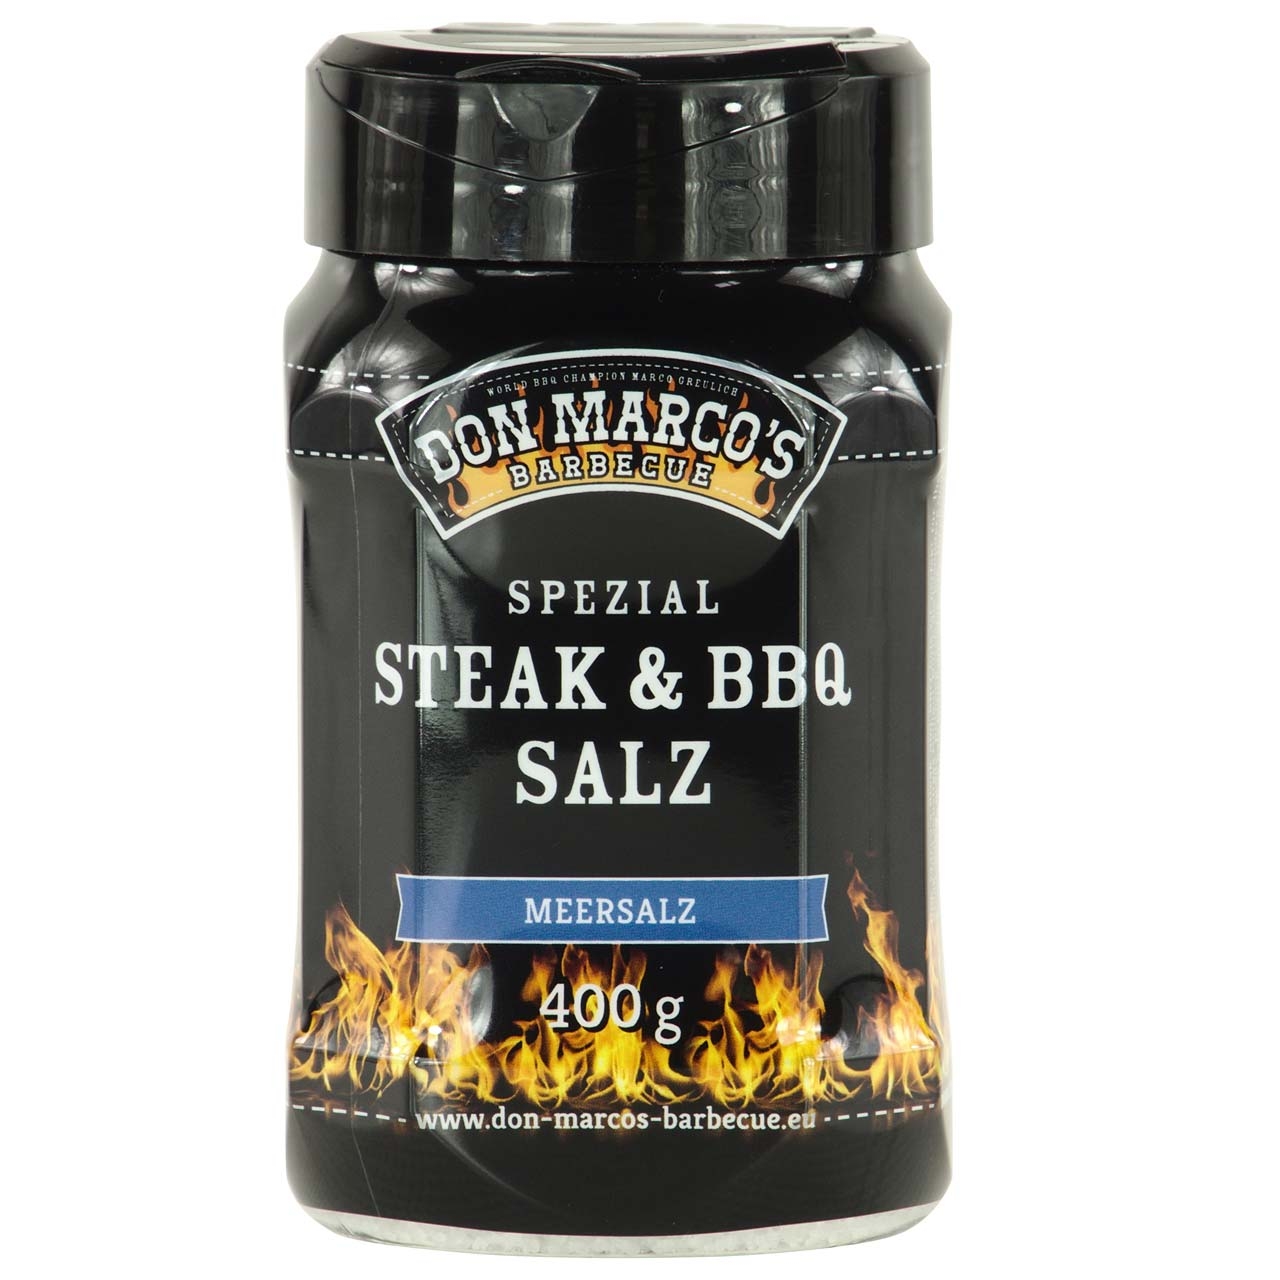 Don Marco's Spezial Steak & BBQ Salz "Meersalz" - 400g Dose